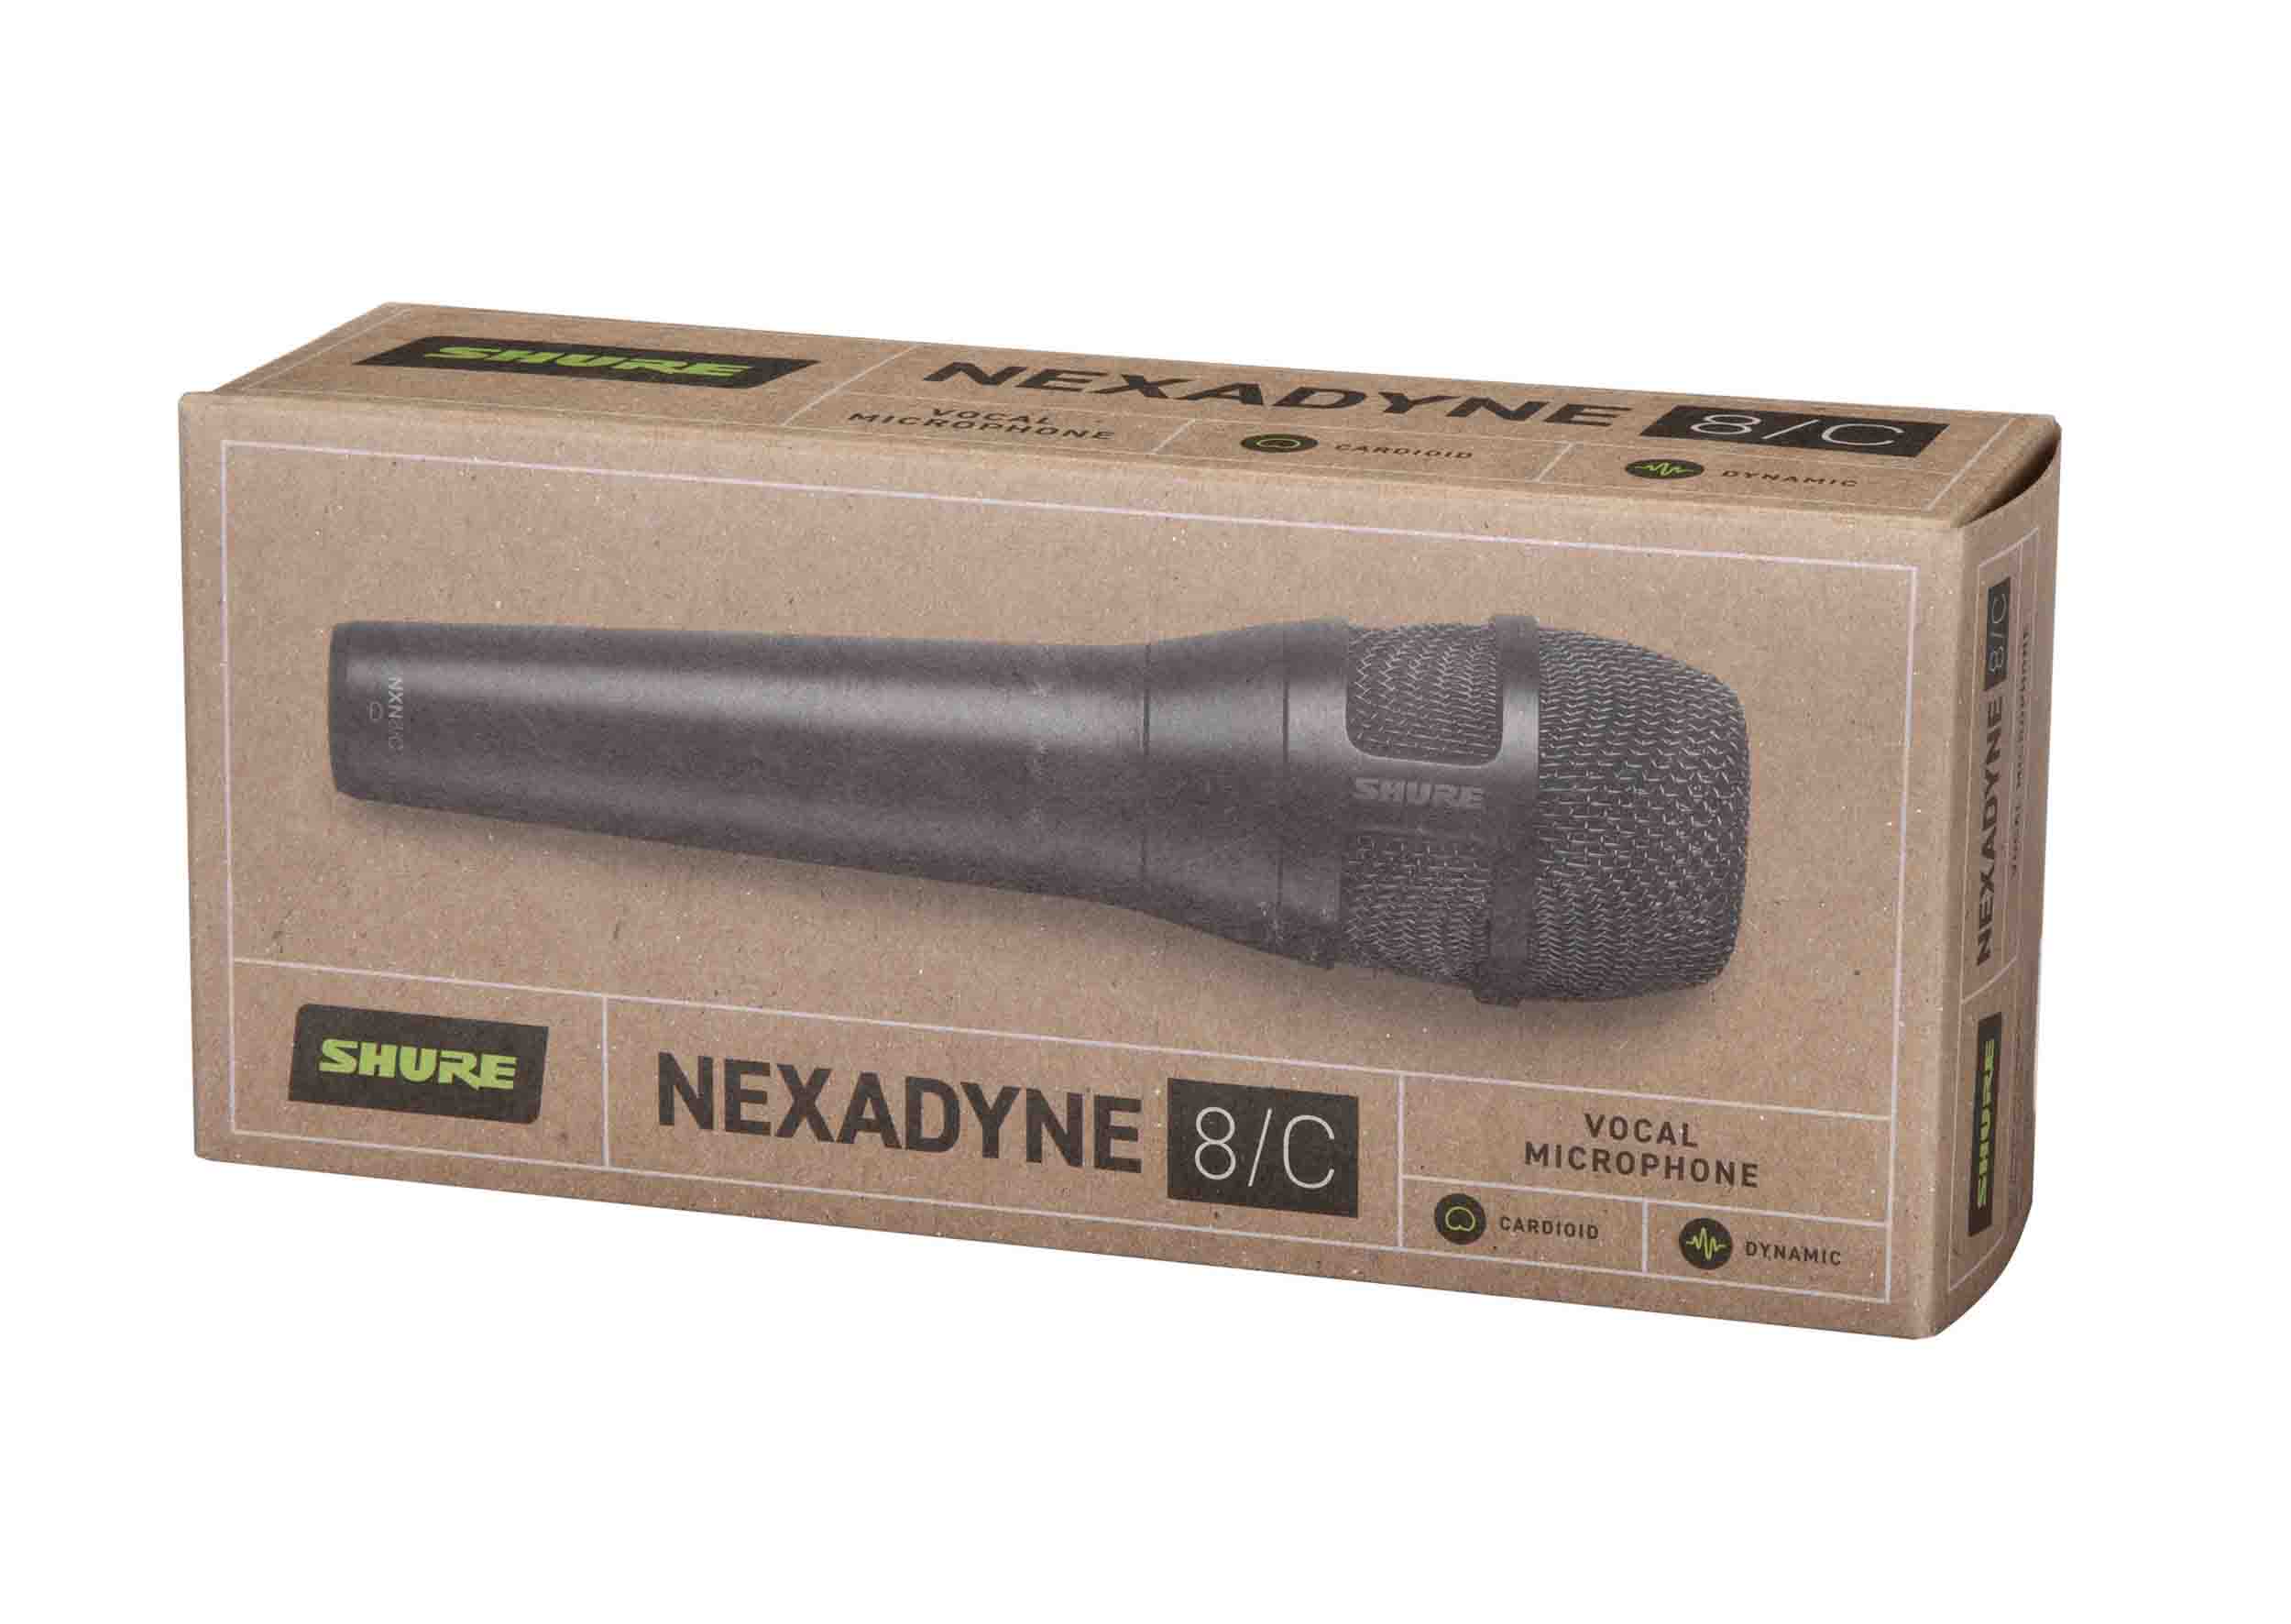 Shure Nexadyne Dynamic Vocal Microphone - Black by Shure